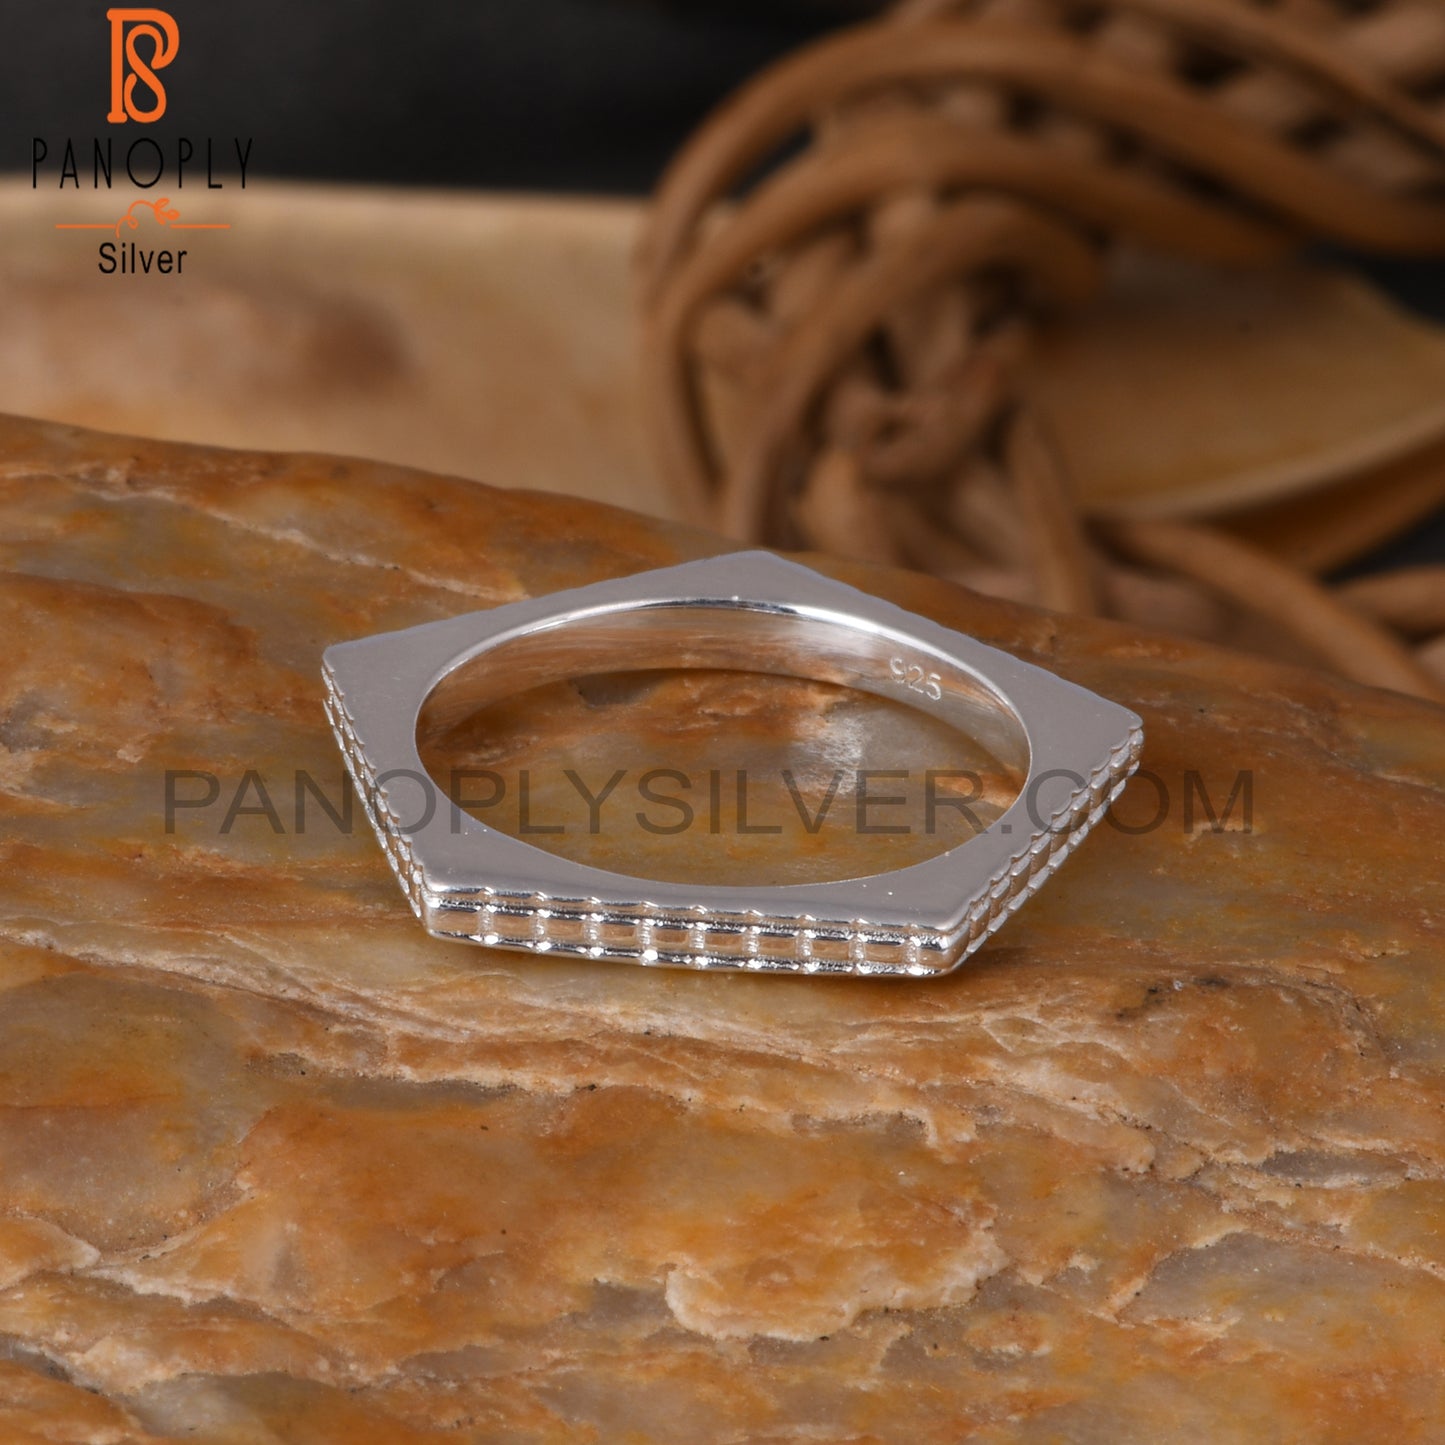 Handmade 925 Sterling Silver Pentagon Ring